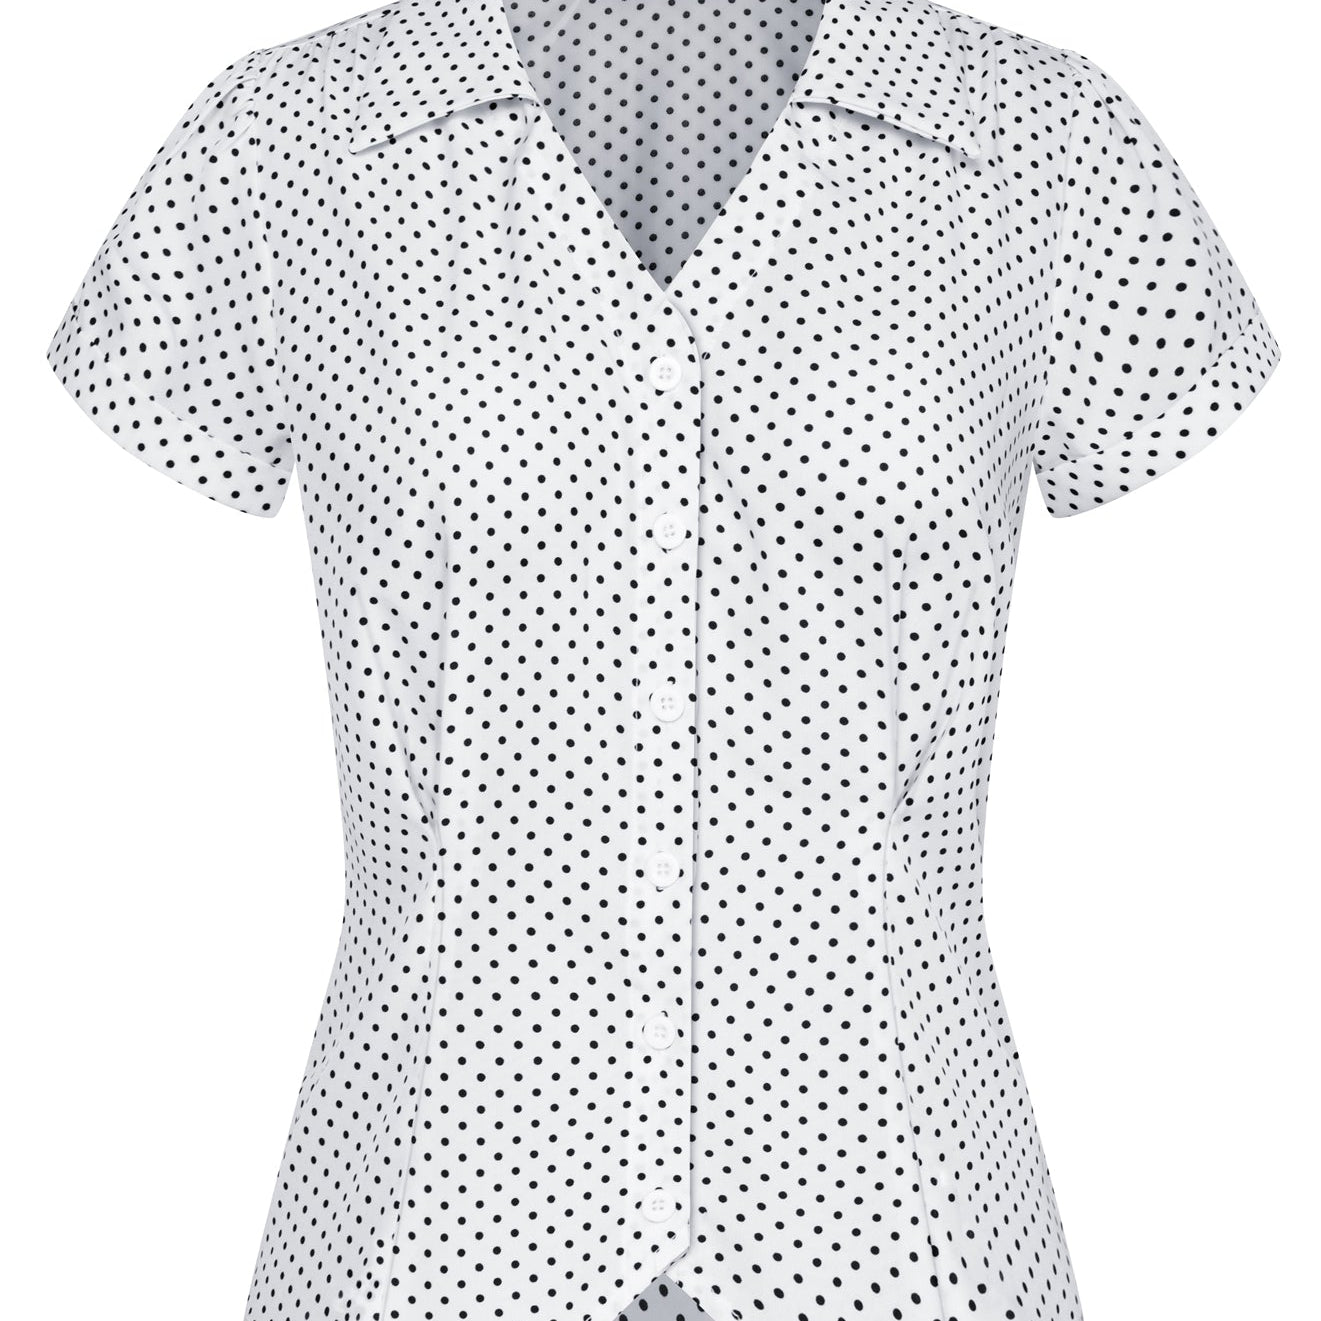 Short Sleeve Button Down Polka Dot Patterns Shirts Vintage Shirts Business Blouse Tops